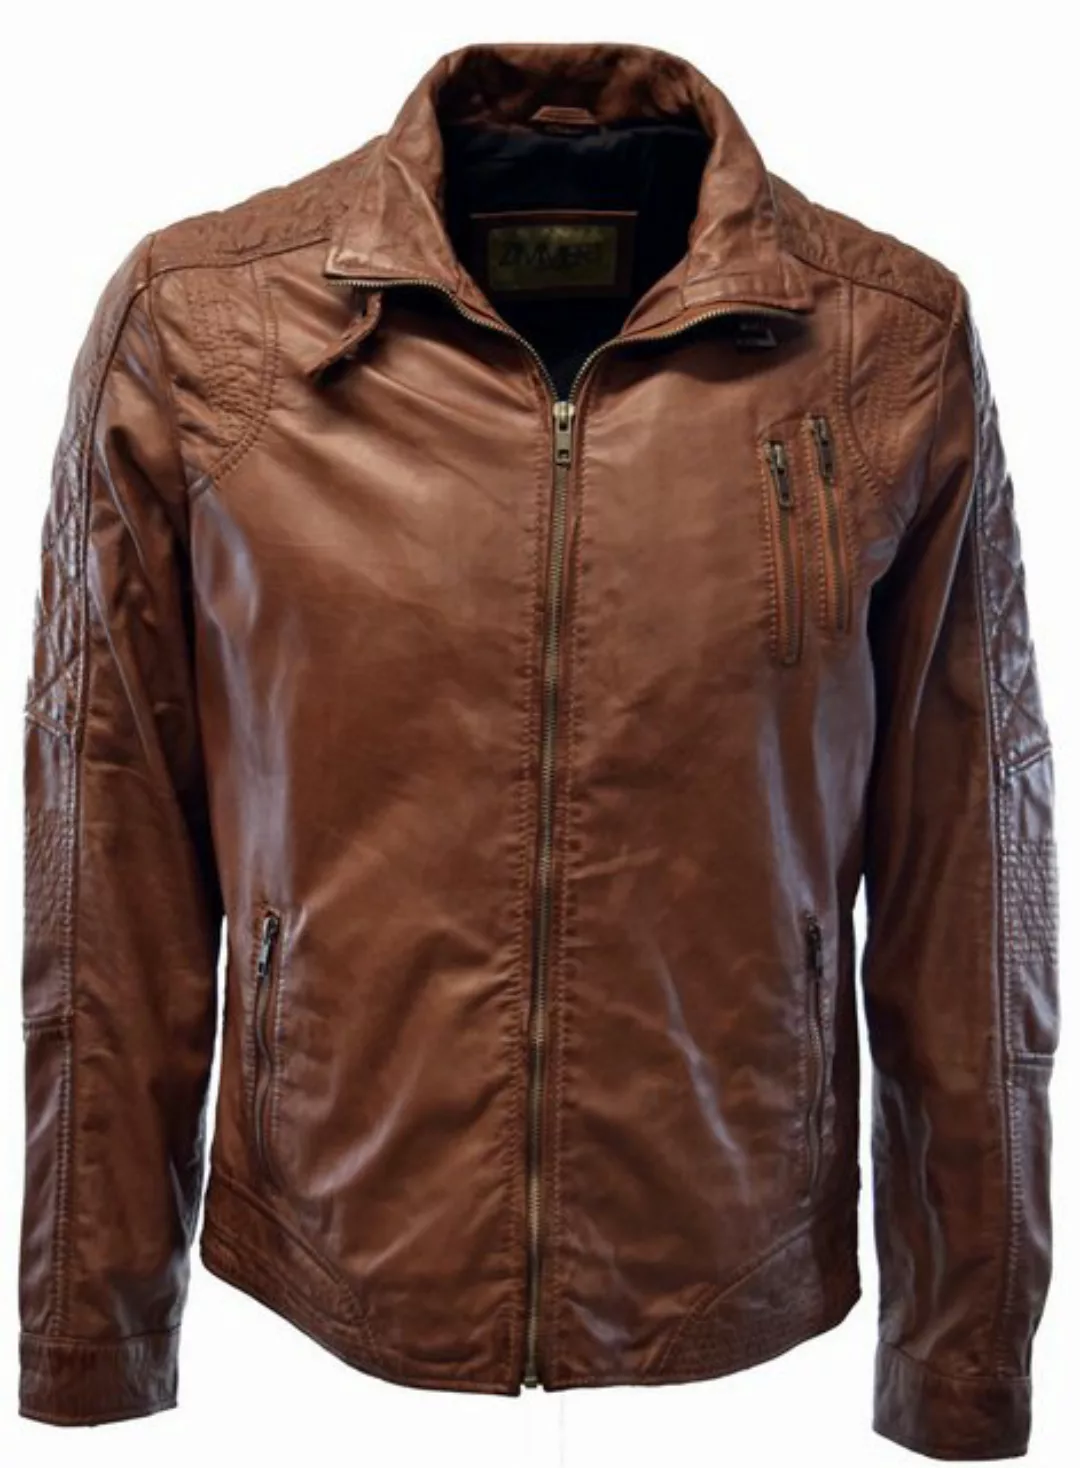 Zimmert Leather Lederjacke Gilbert gesteppt in washed Mocca, Braun, Cognac, günstig online kaufen